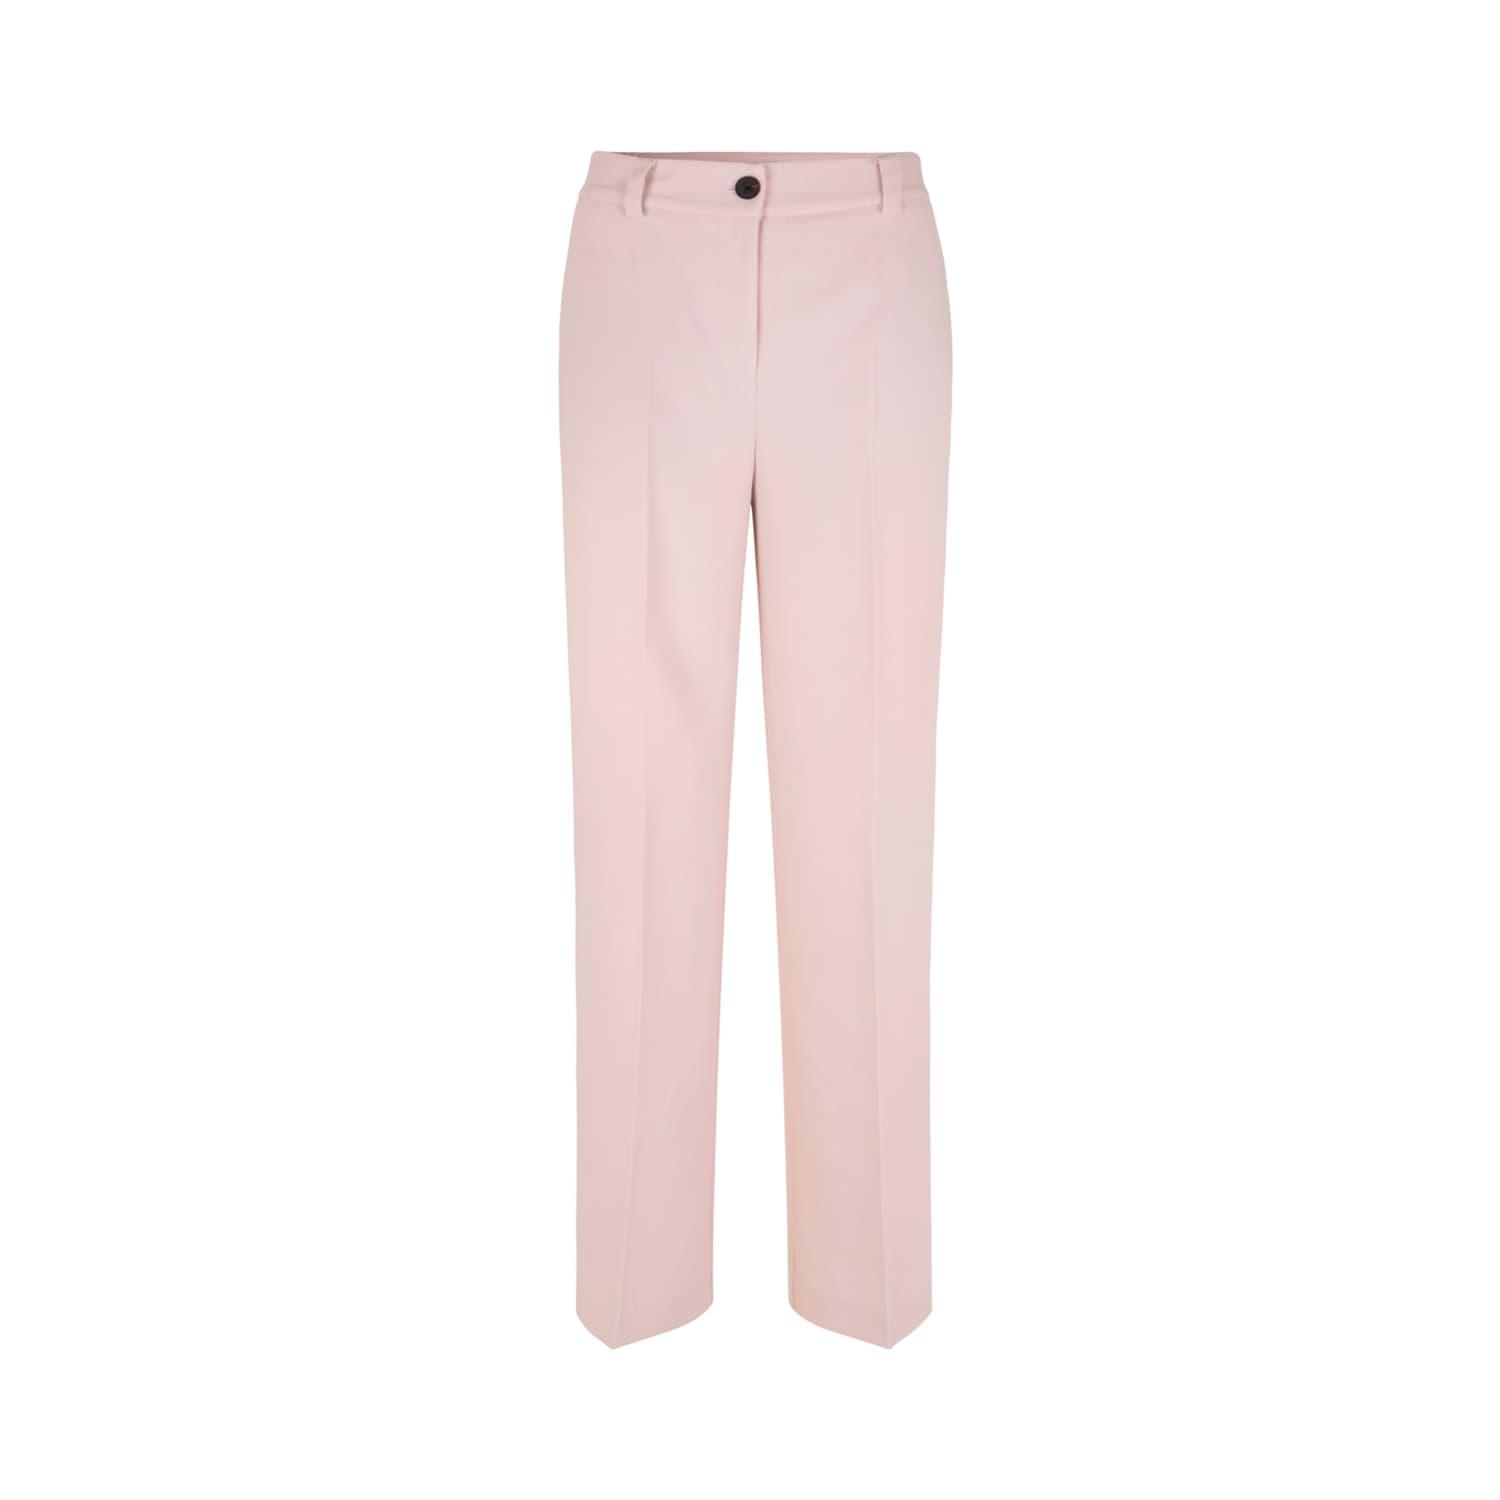 Modström Pink Gale Pants | Lyst